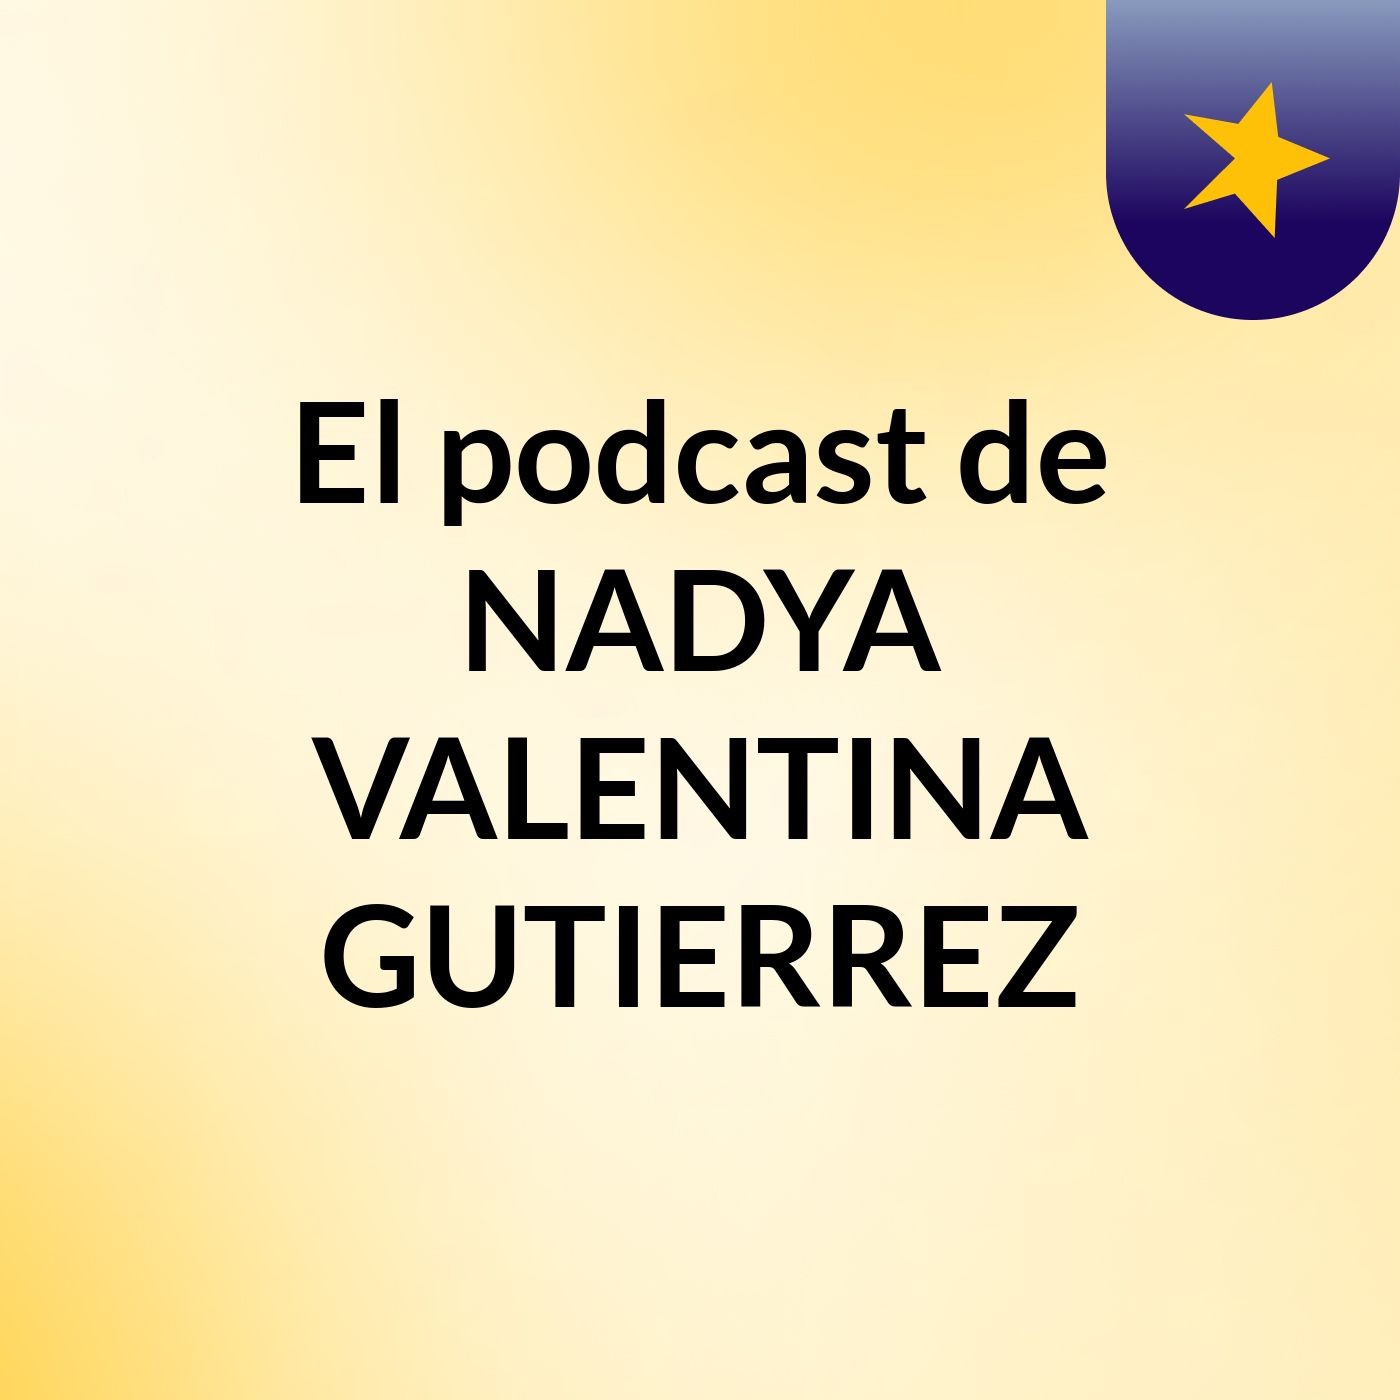 El podcast de NADYA VALENTINA GUTIERREZ 